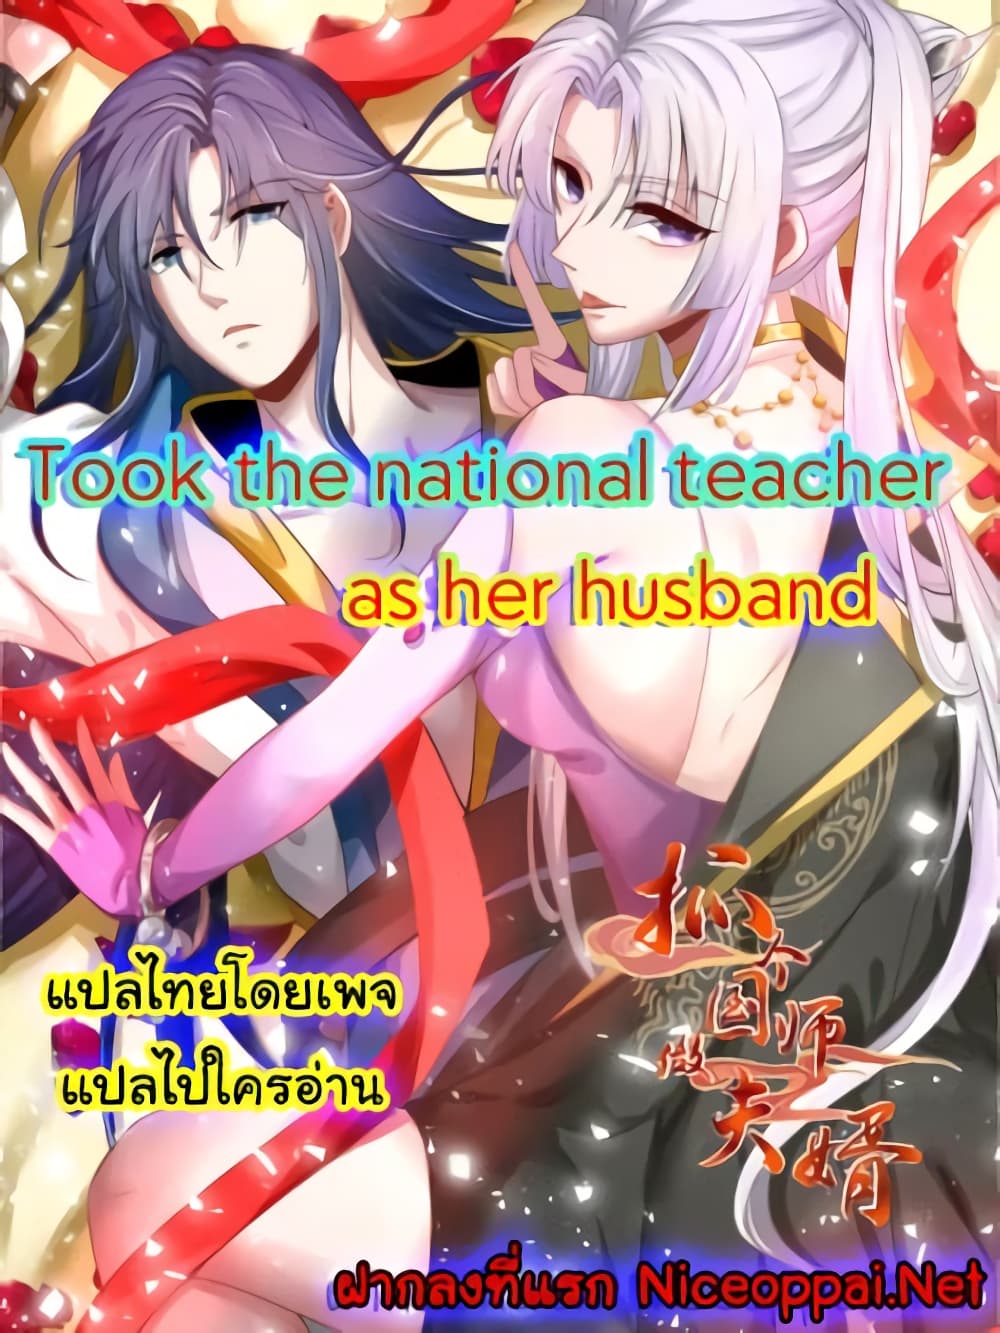 Took the National Teacher as Her Husband 34 (1)